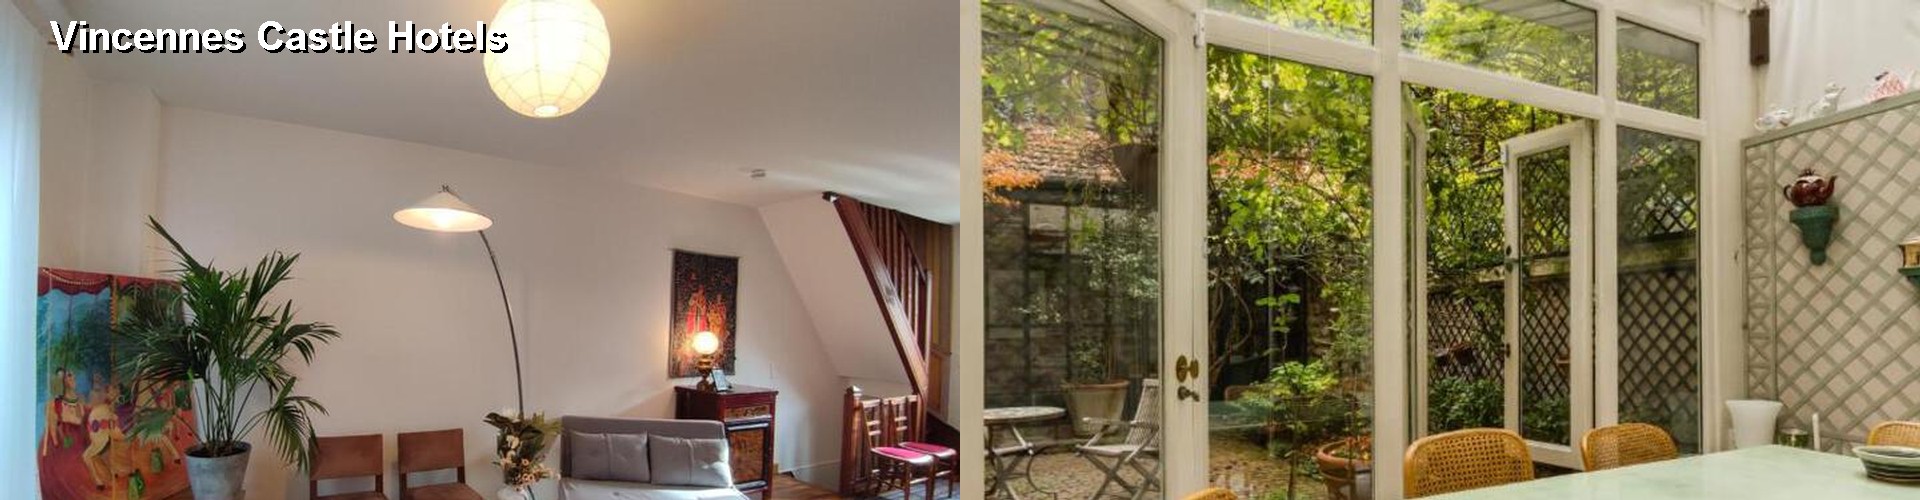 4 Best Hotels near Vincennes Castle